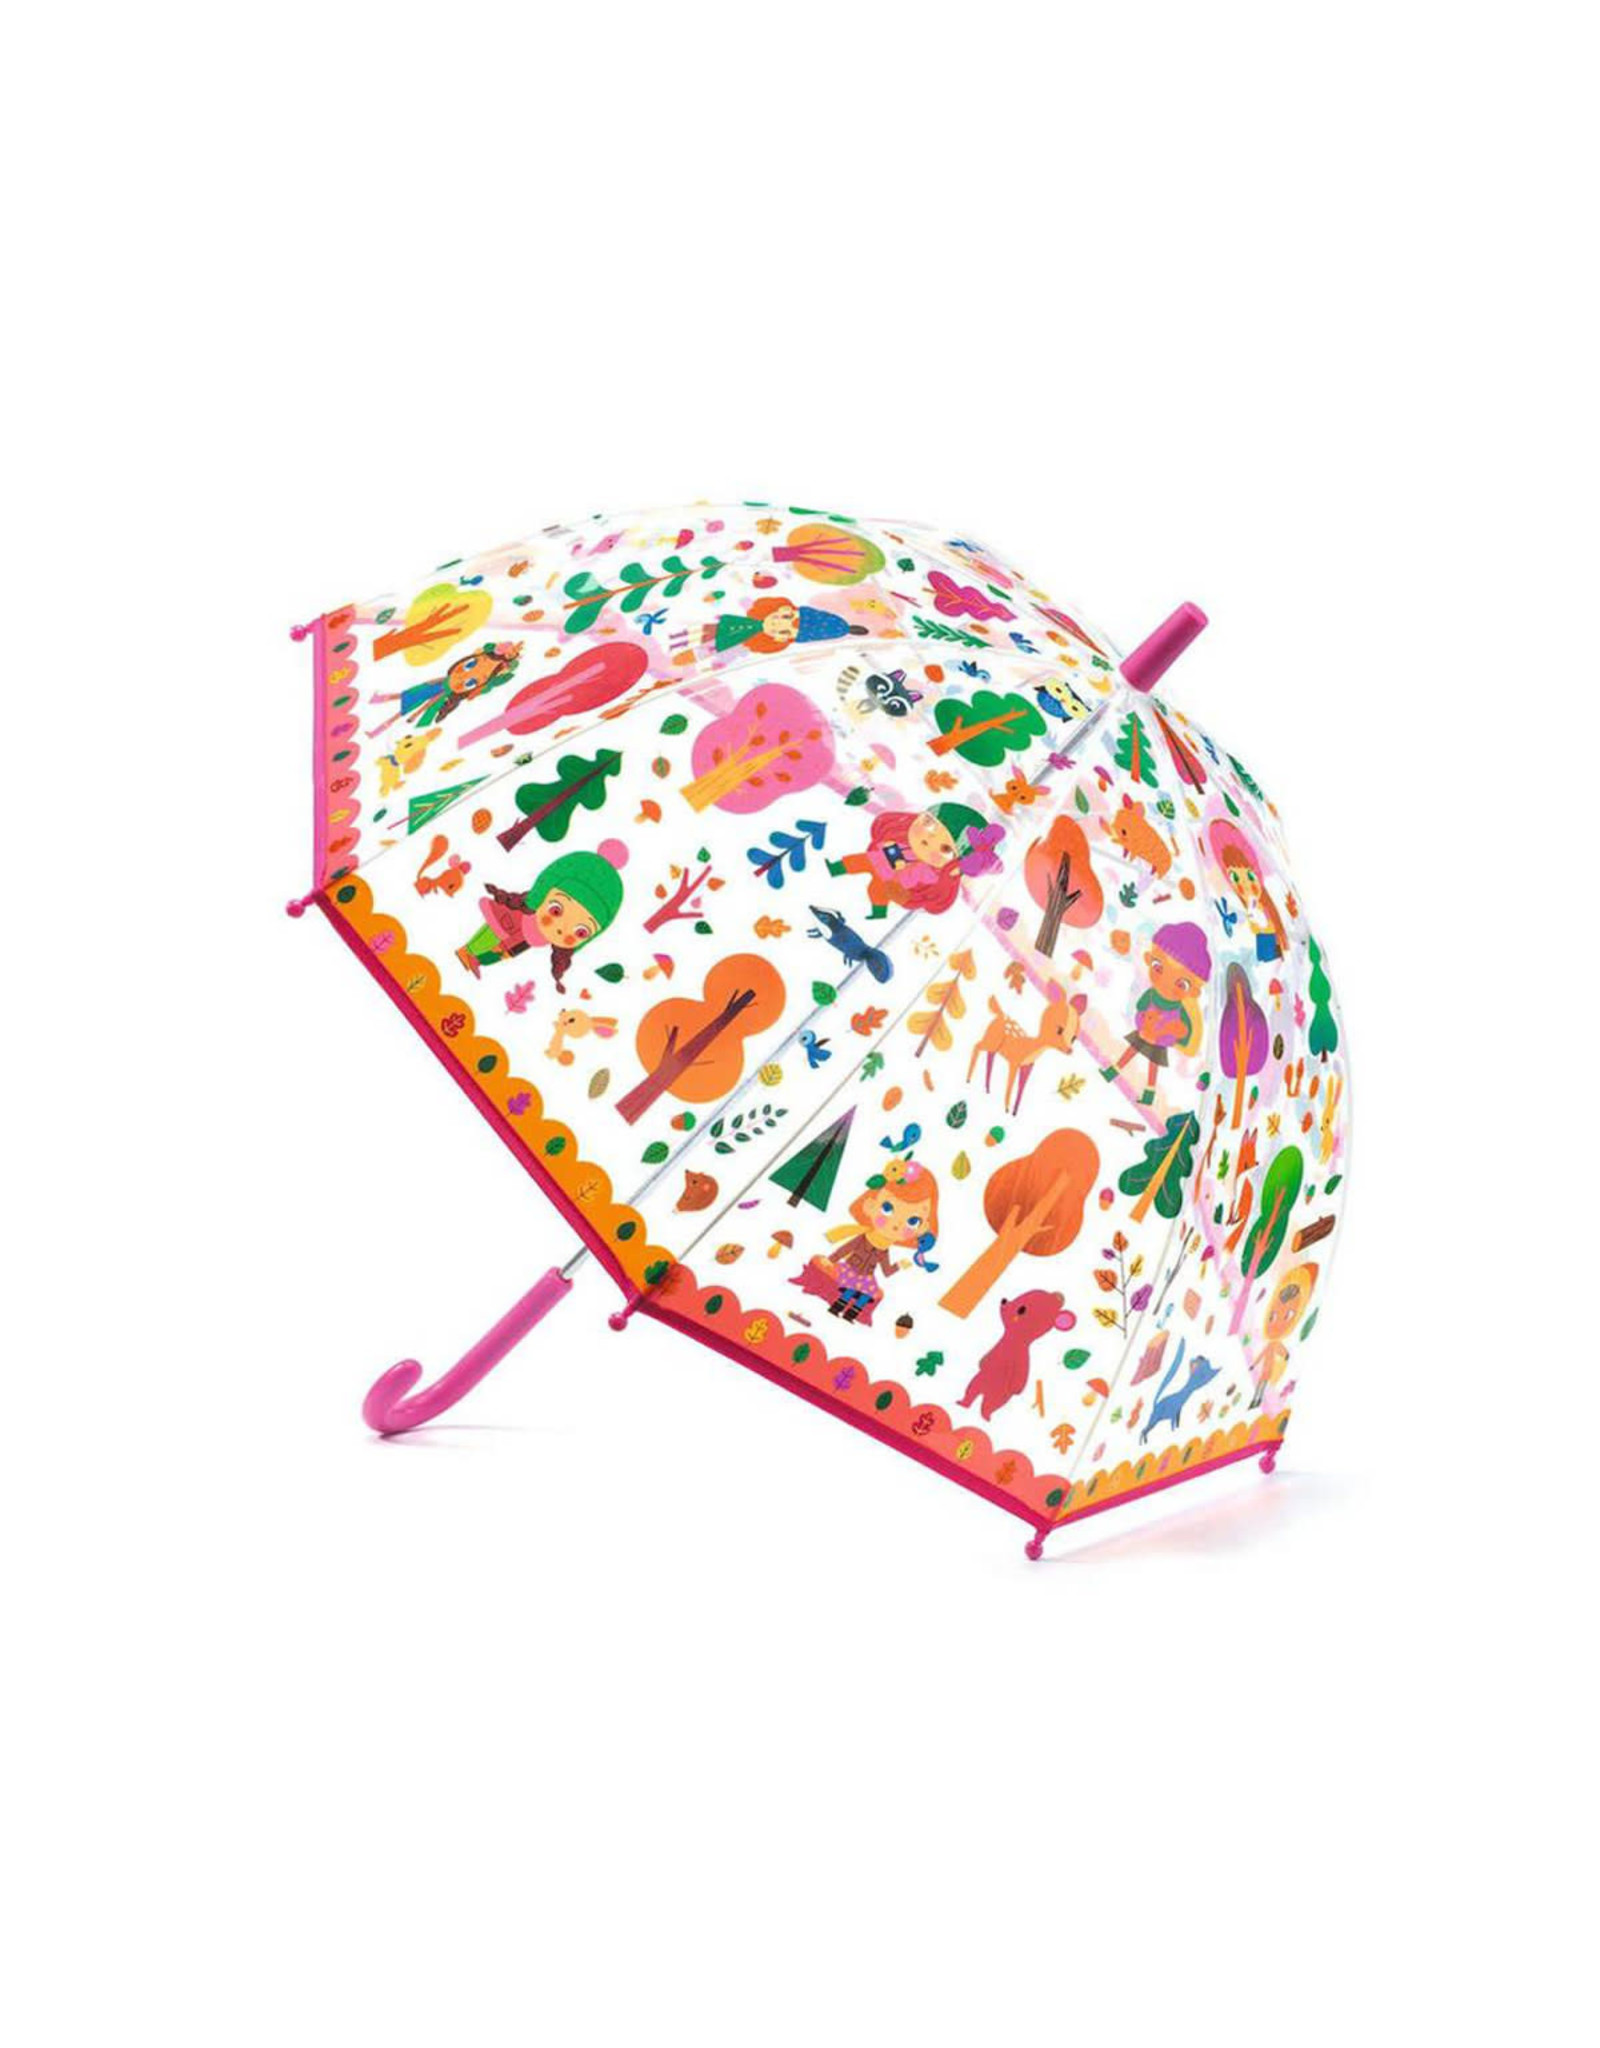 Djeco Umbrella, Changing Colours Faces